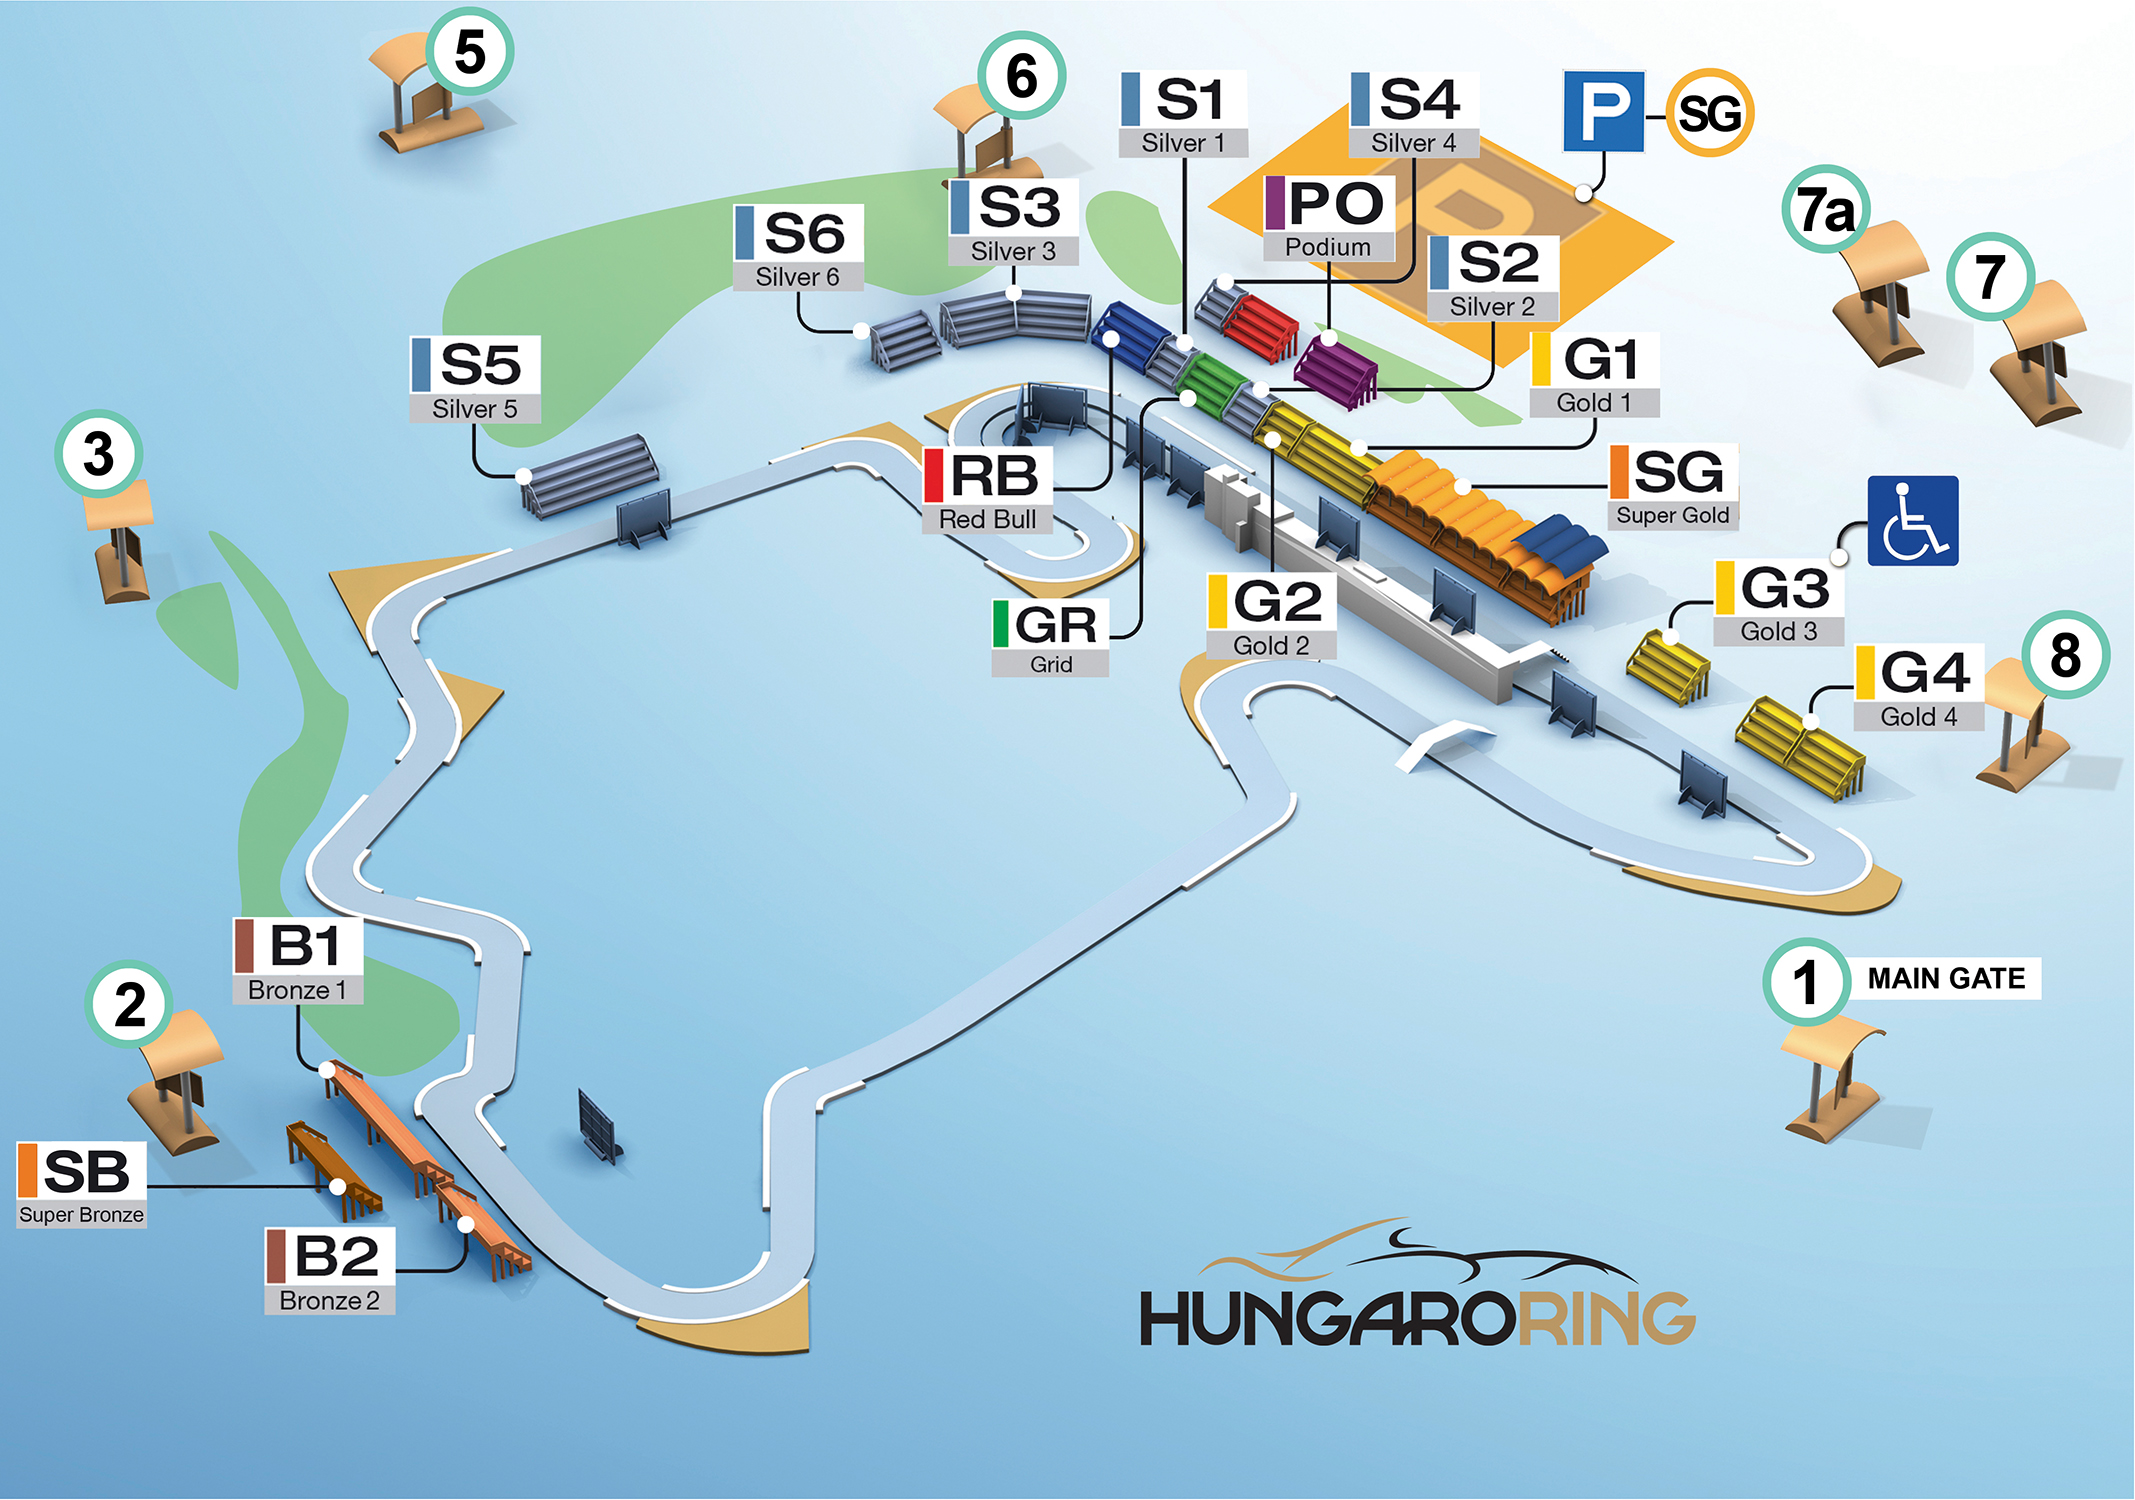 Hungaroring mapa